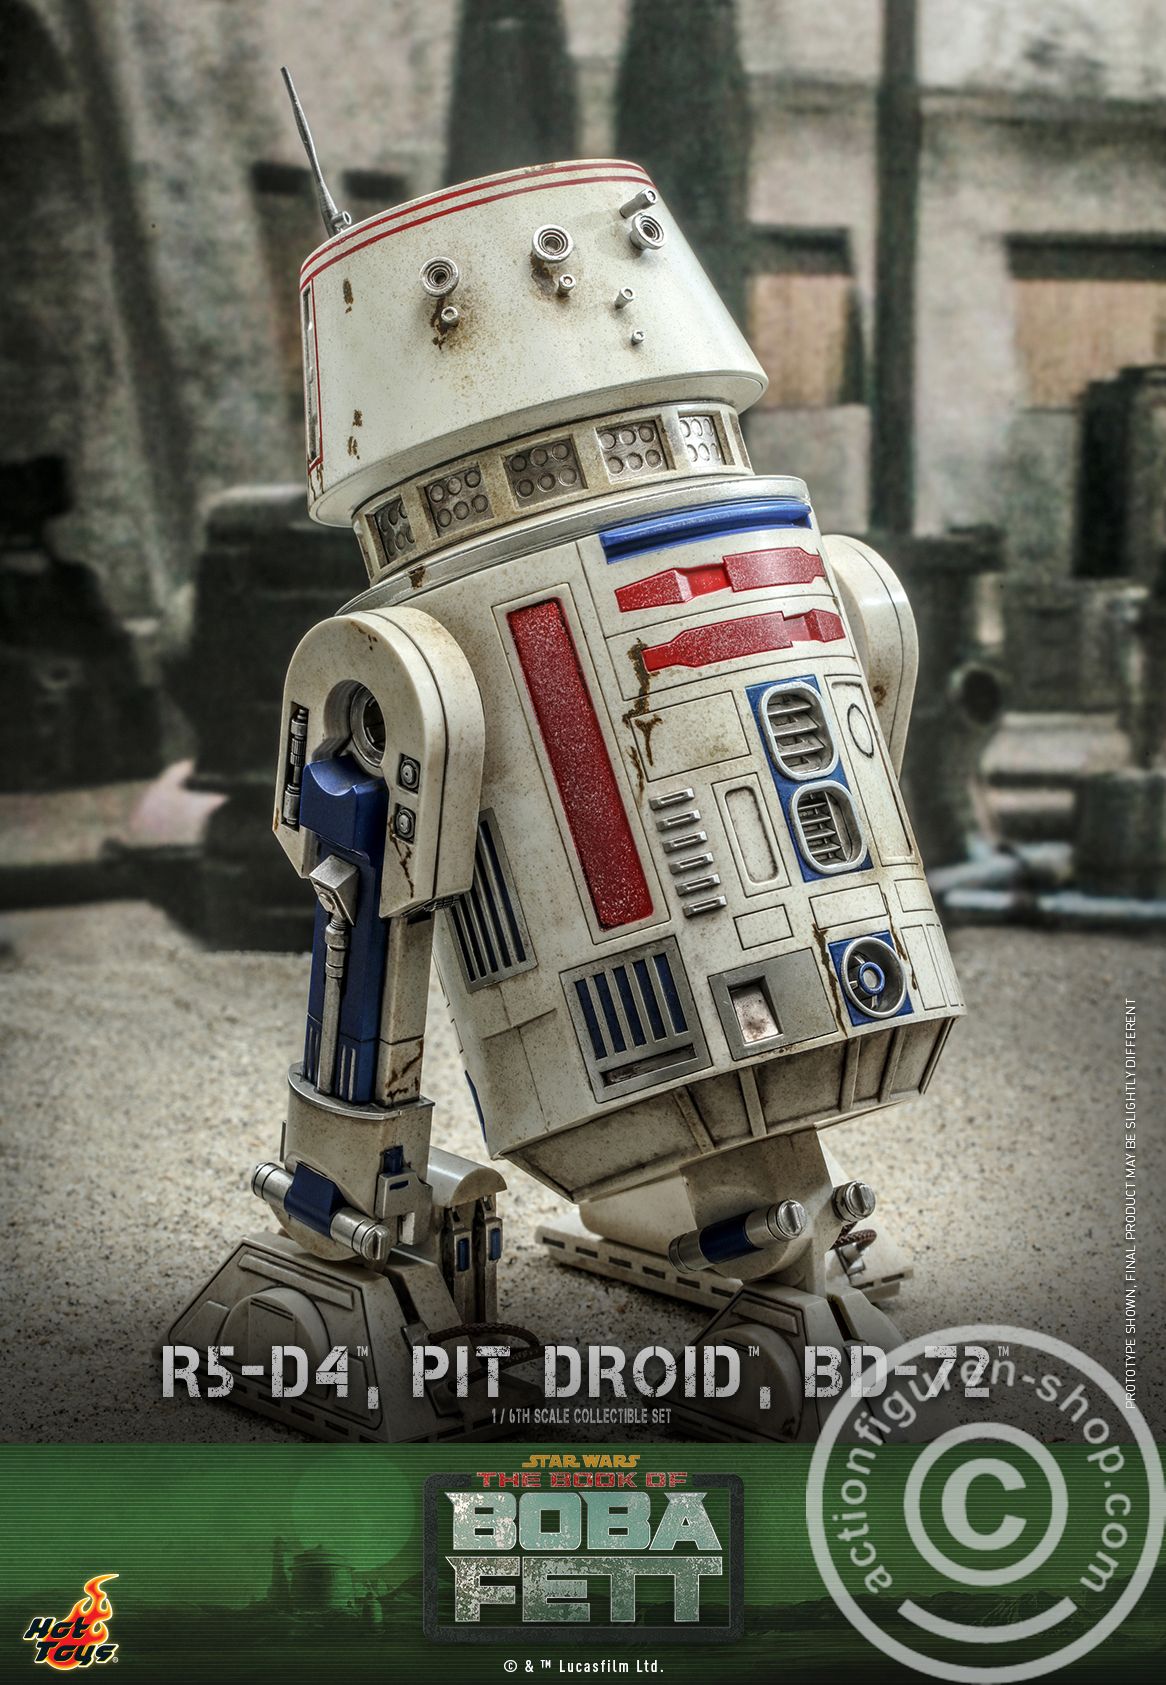 Star Wars: The Book of Boba Fett - R5-D4, Pit Droid, BD-72 Set